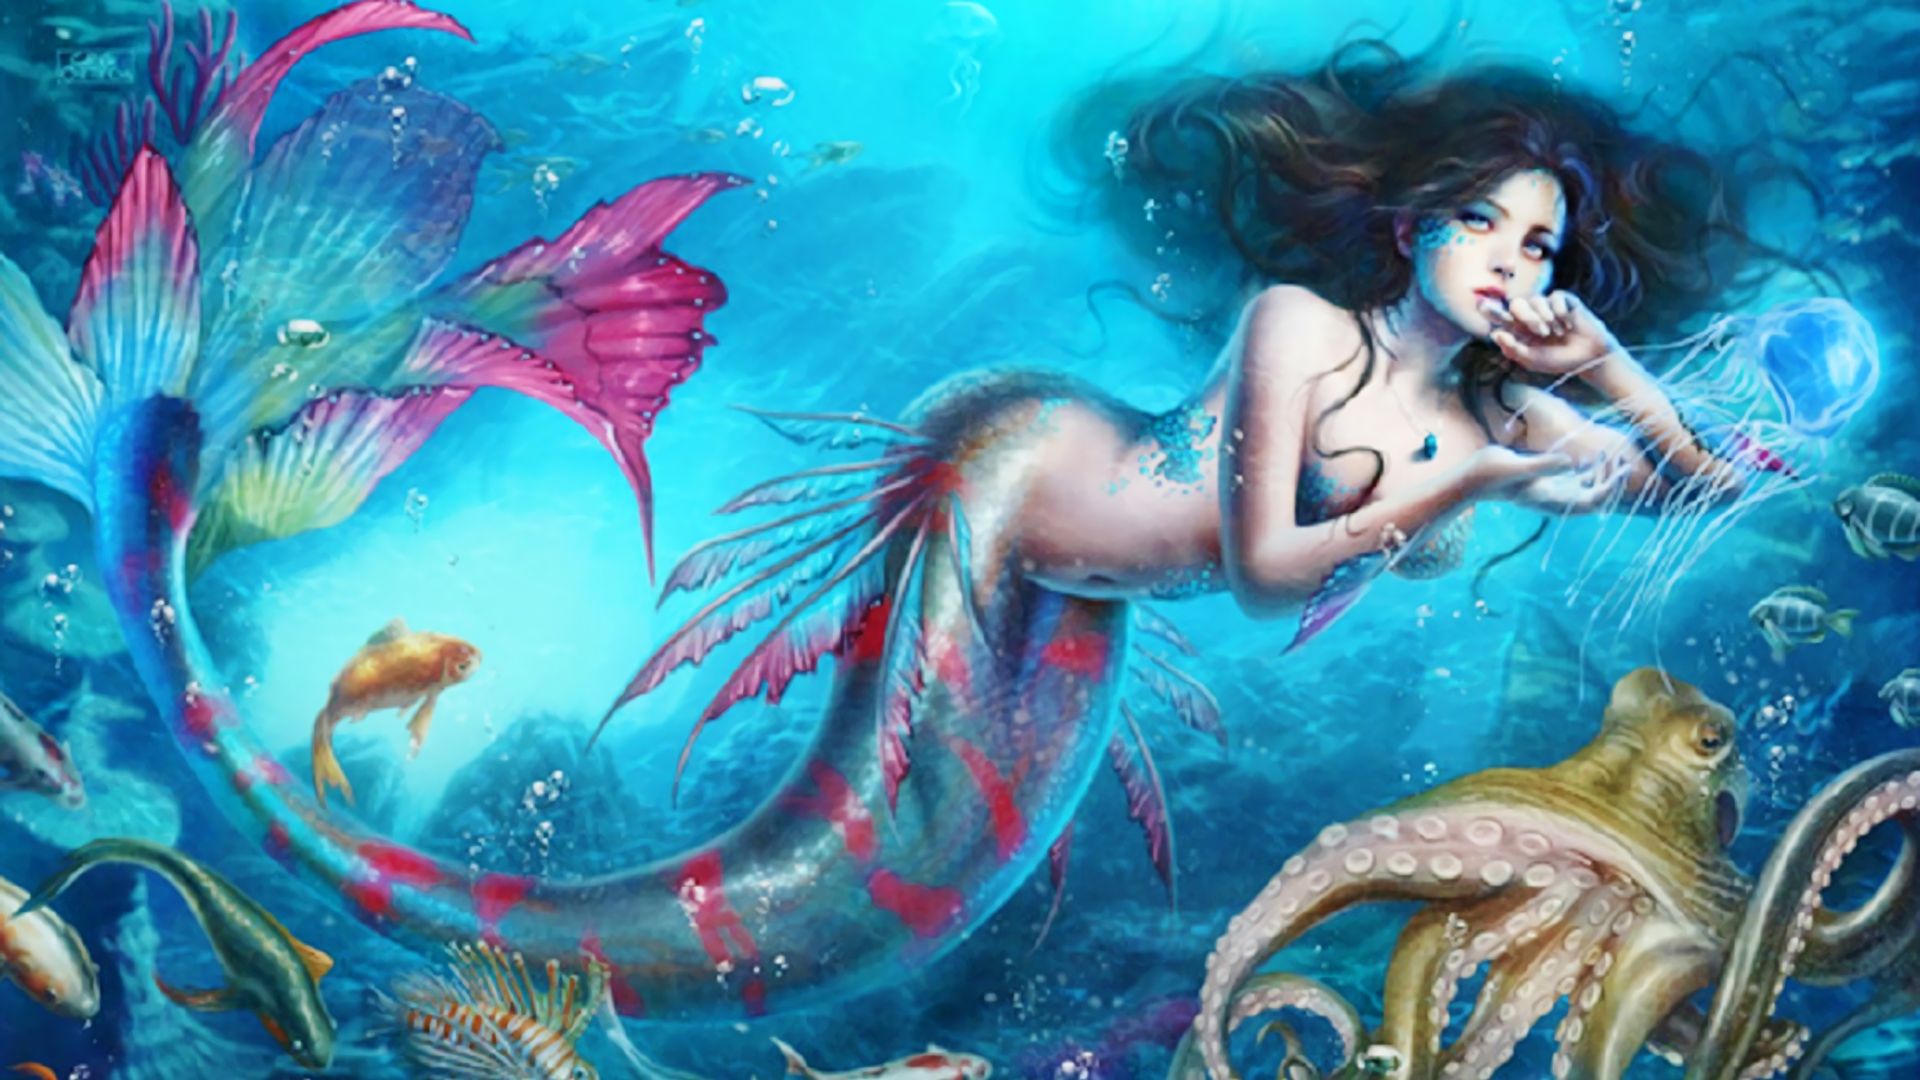 Descarga gratuita de fondo de pantalla para móvil de Fantasía, Sirena, Submarina.